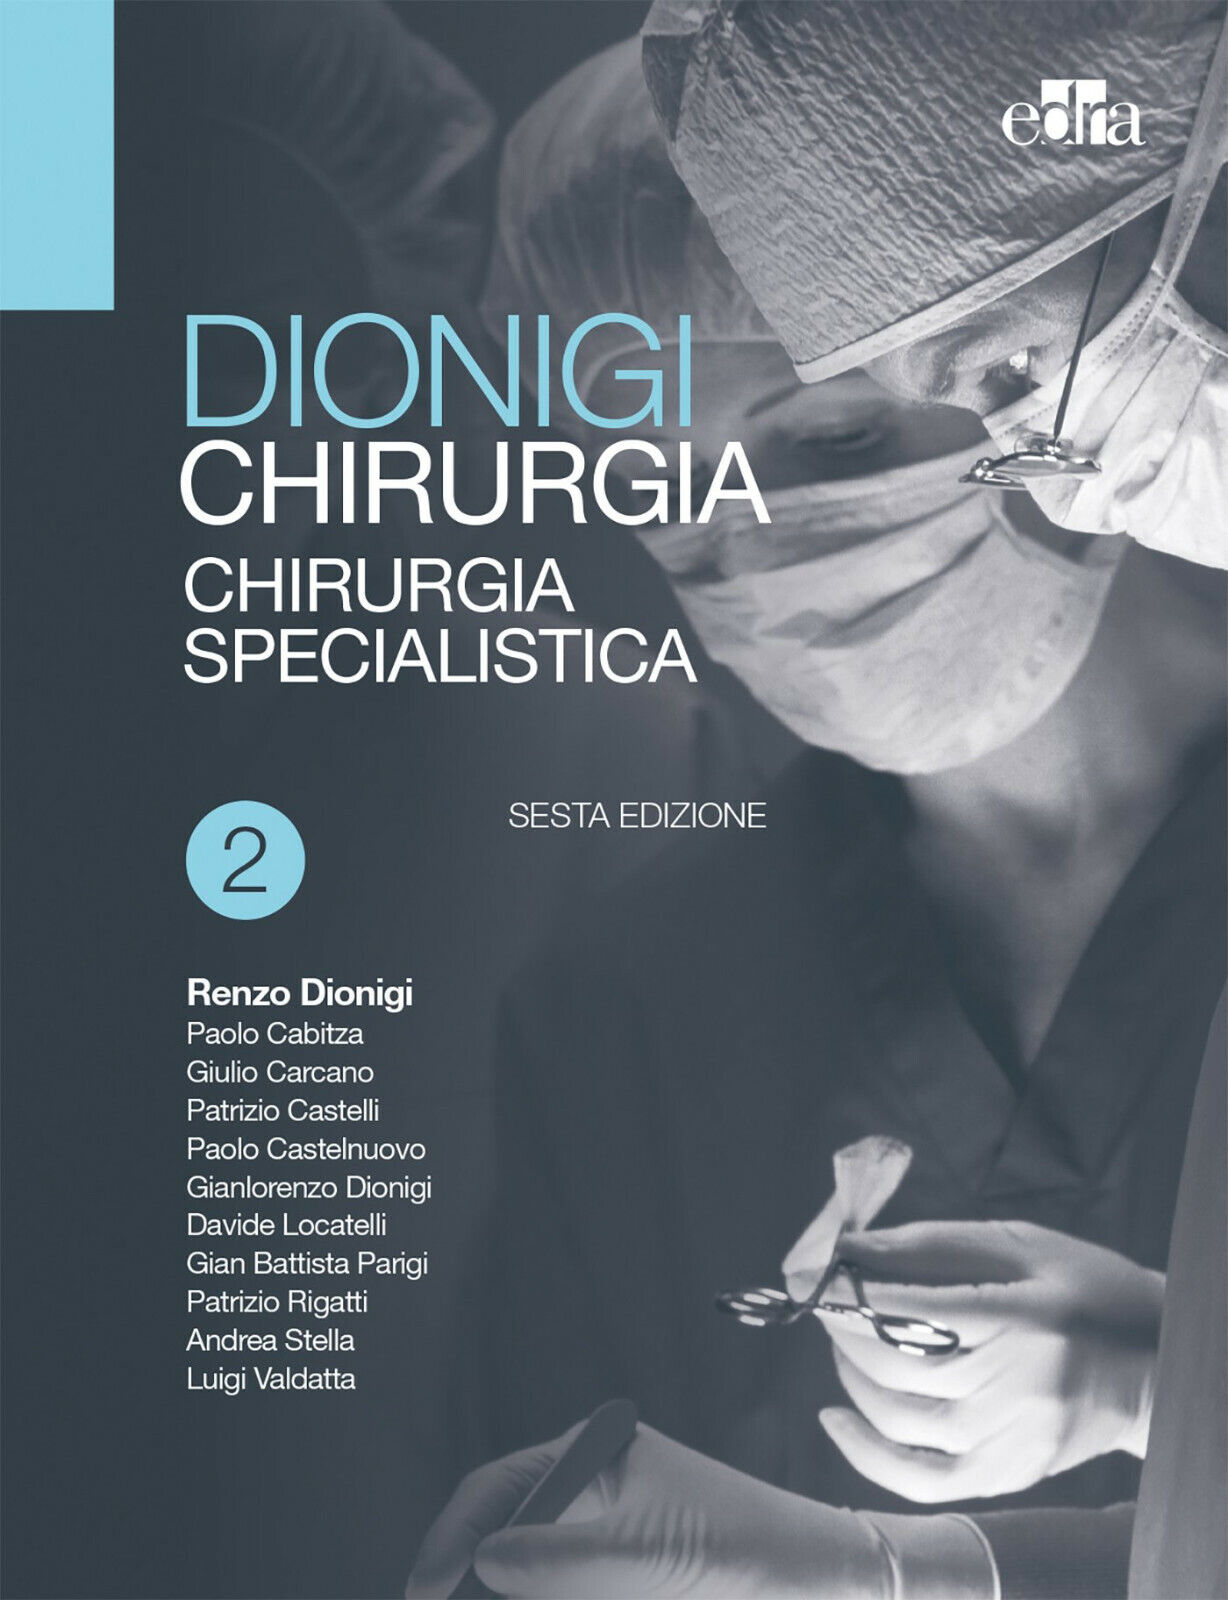 Chirurgia. Basi teoriche e chirurgia generale - Renzo Dionigi - Edra, 2017